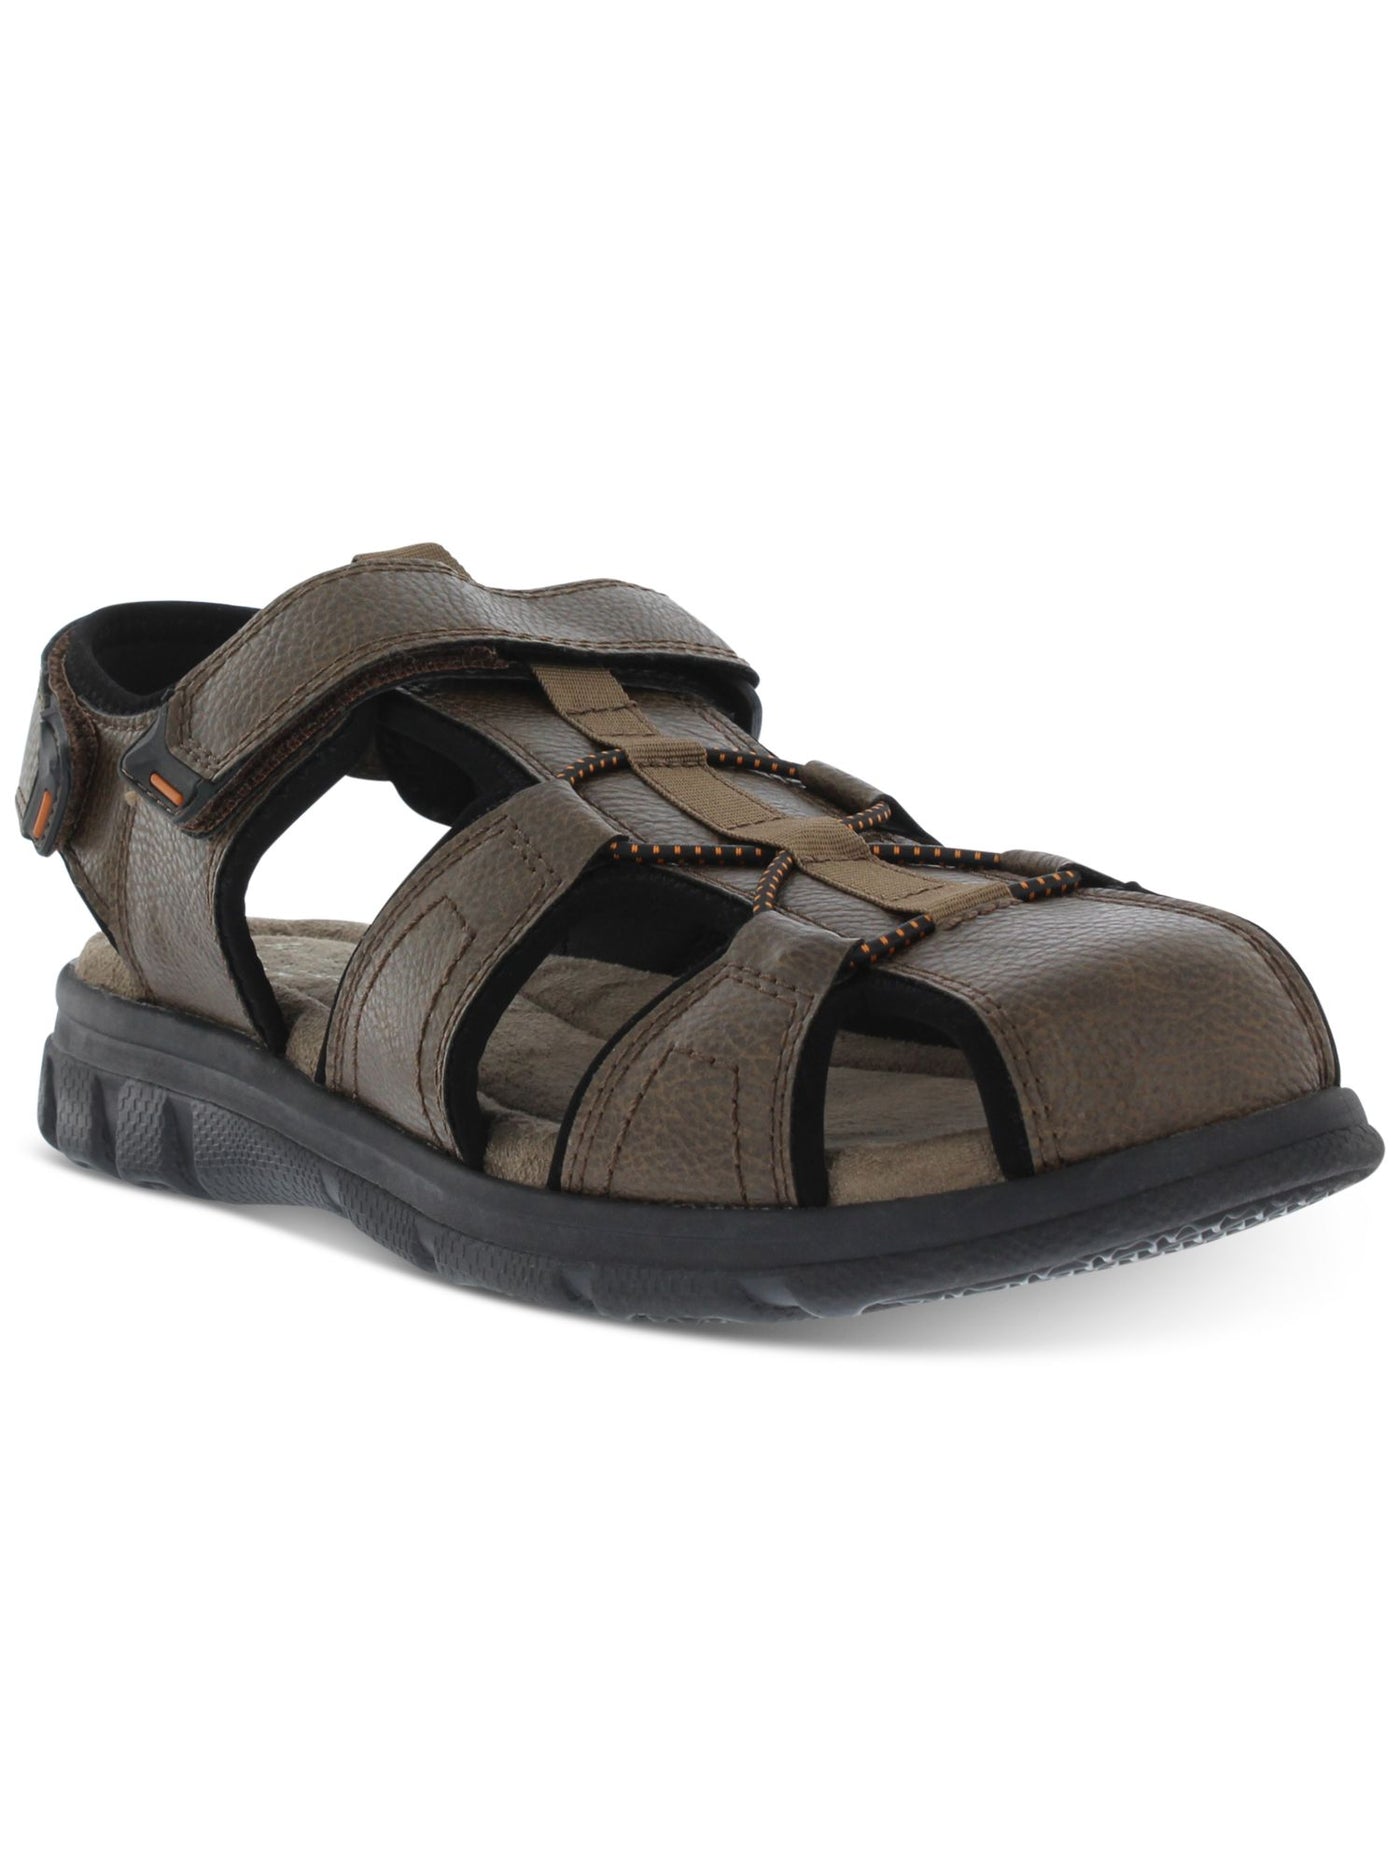 WEATHERPROOF VINTAGE Mens Brown Caged Cushioned Adjustable Cory Round Toe Platform Sandals Shoes 8 M